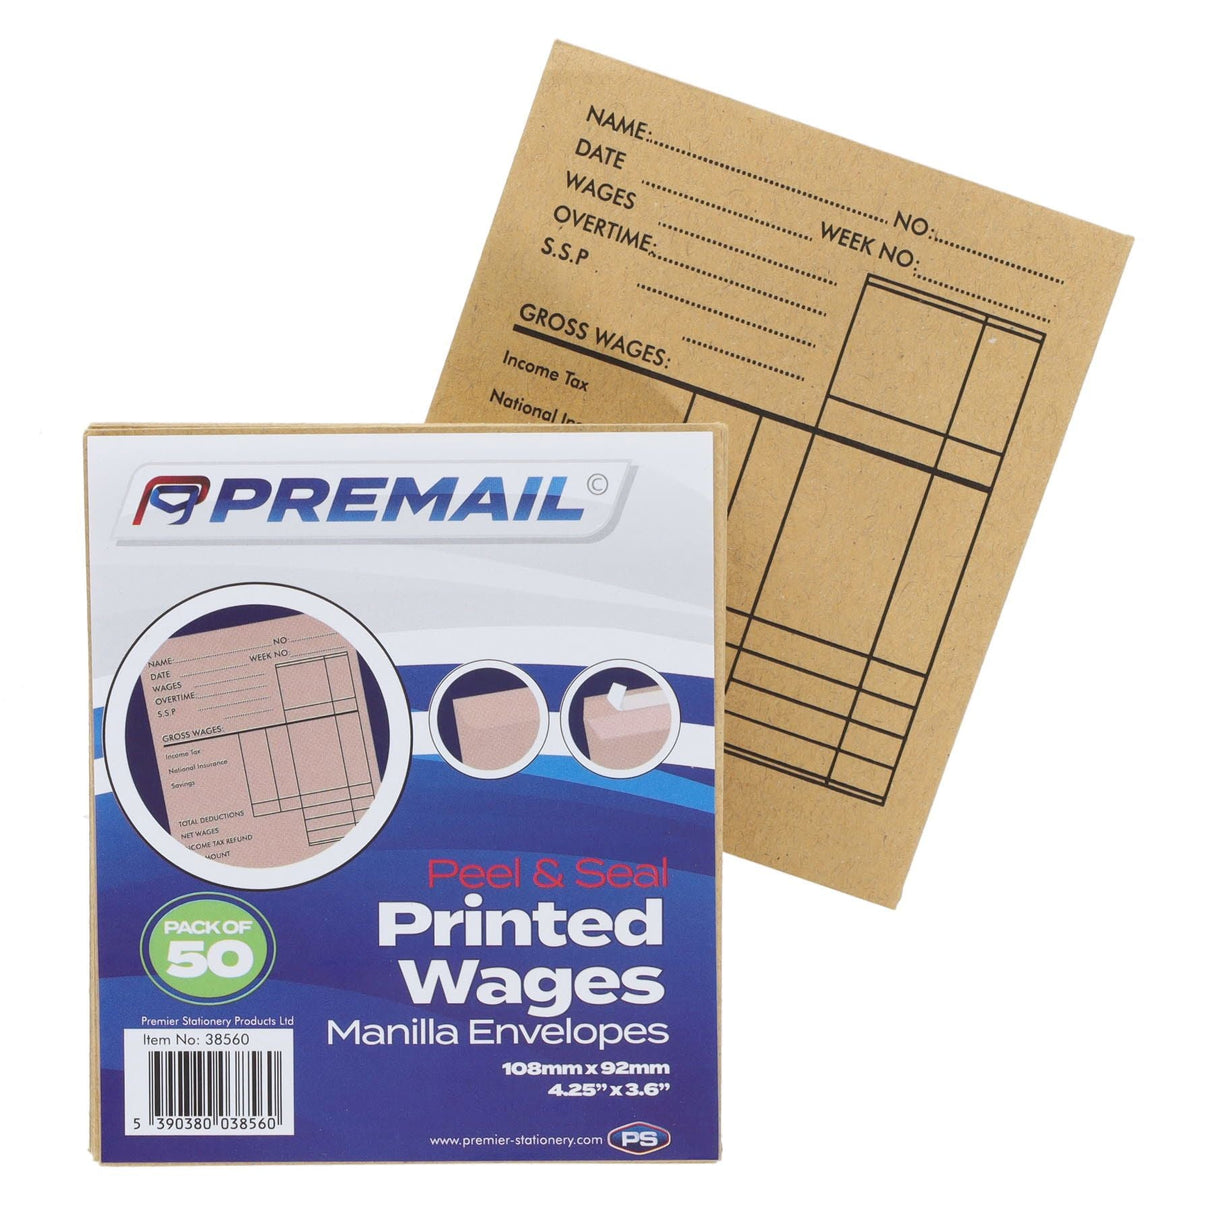 Premail Peel & Seal Printed Wages Manilla Envelopes - Pack of 50-Envelopes-Premail|StationeryShop.co.uk